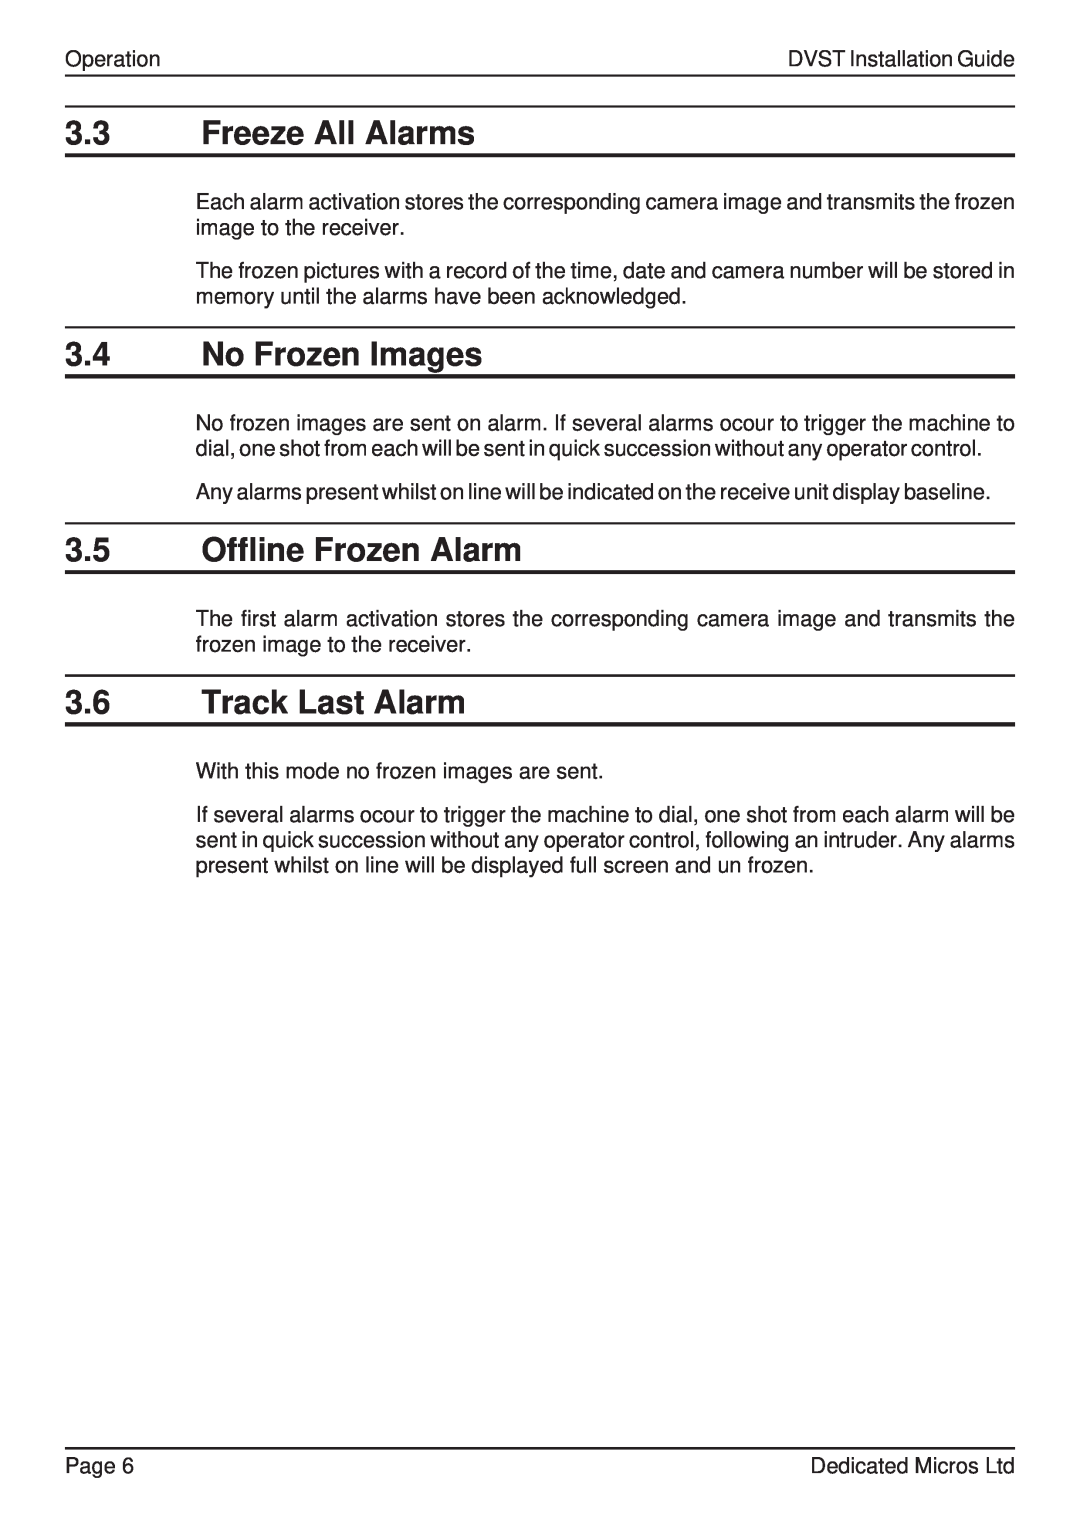 Guardian Technologies DVST manual 3.3Freeze All Alarms, 3.4No Frozen Images, 3.5Offline Frozen Alarm, 3.6Track Last Alarm 